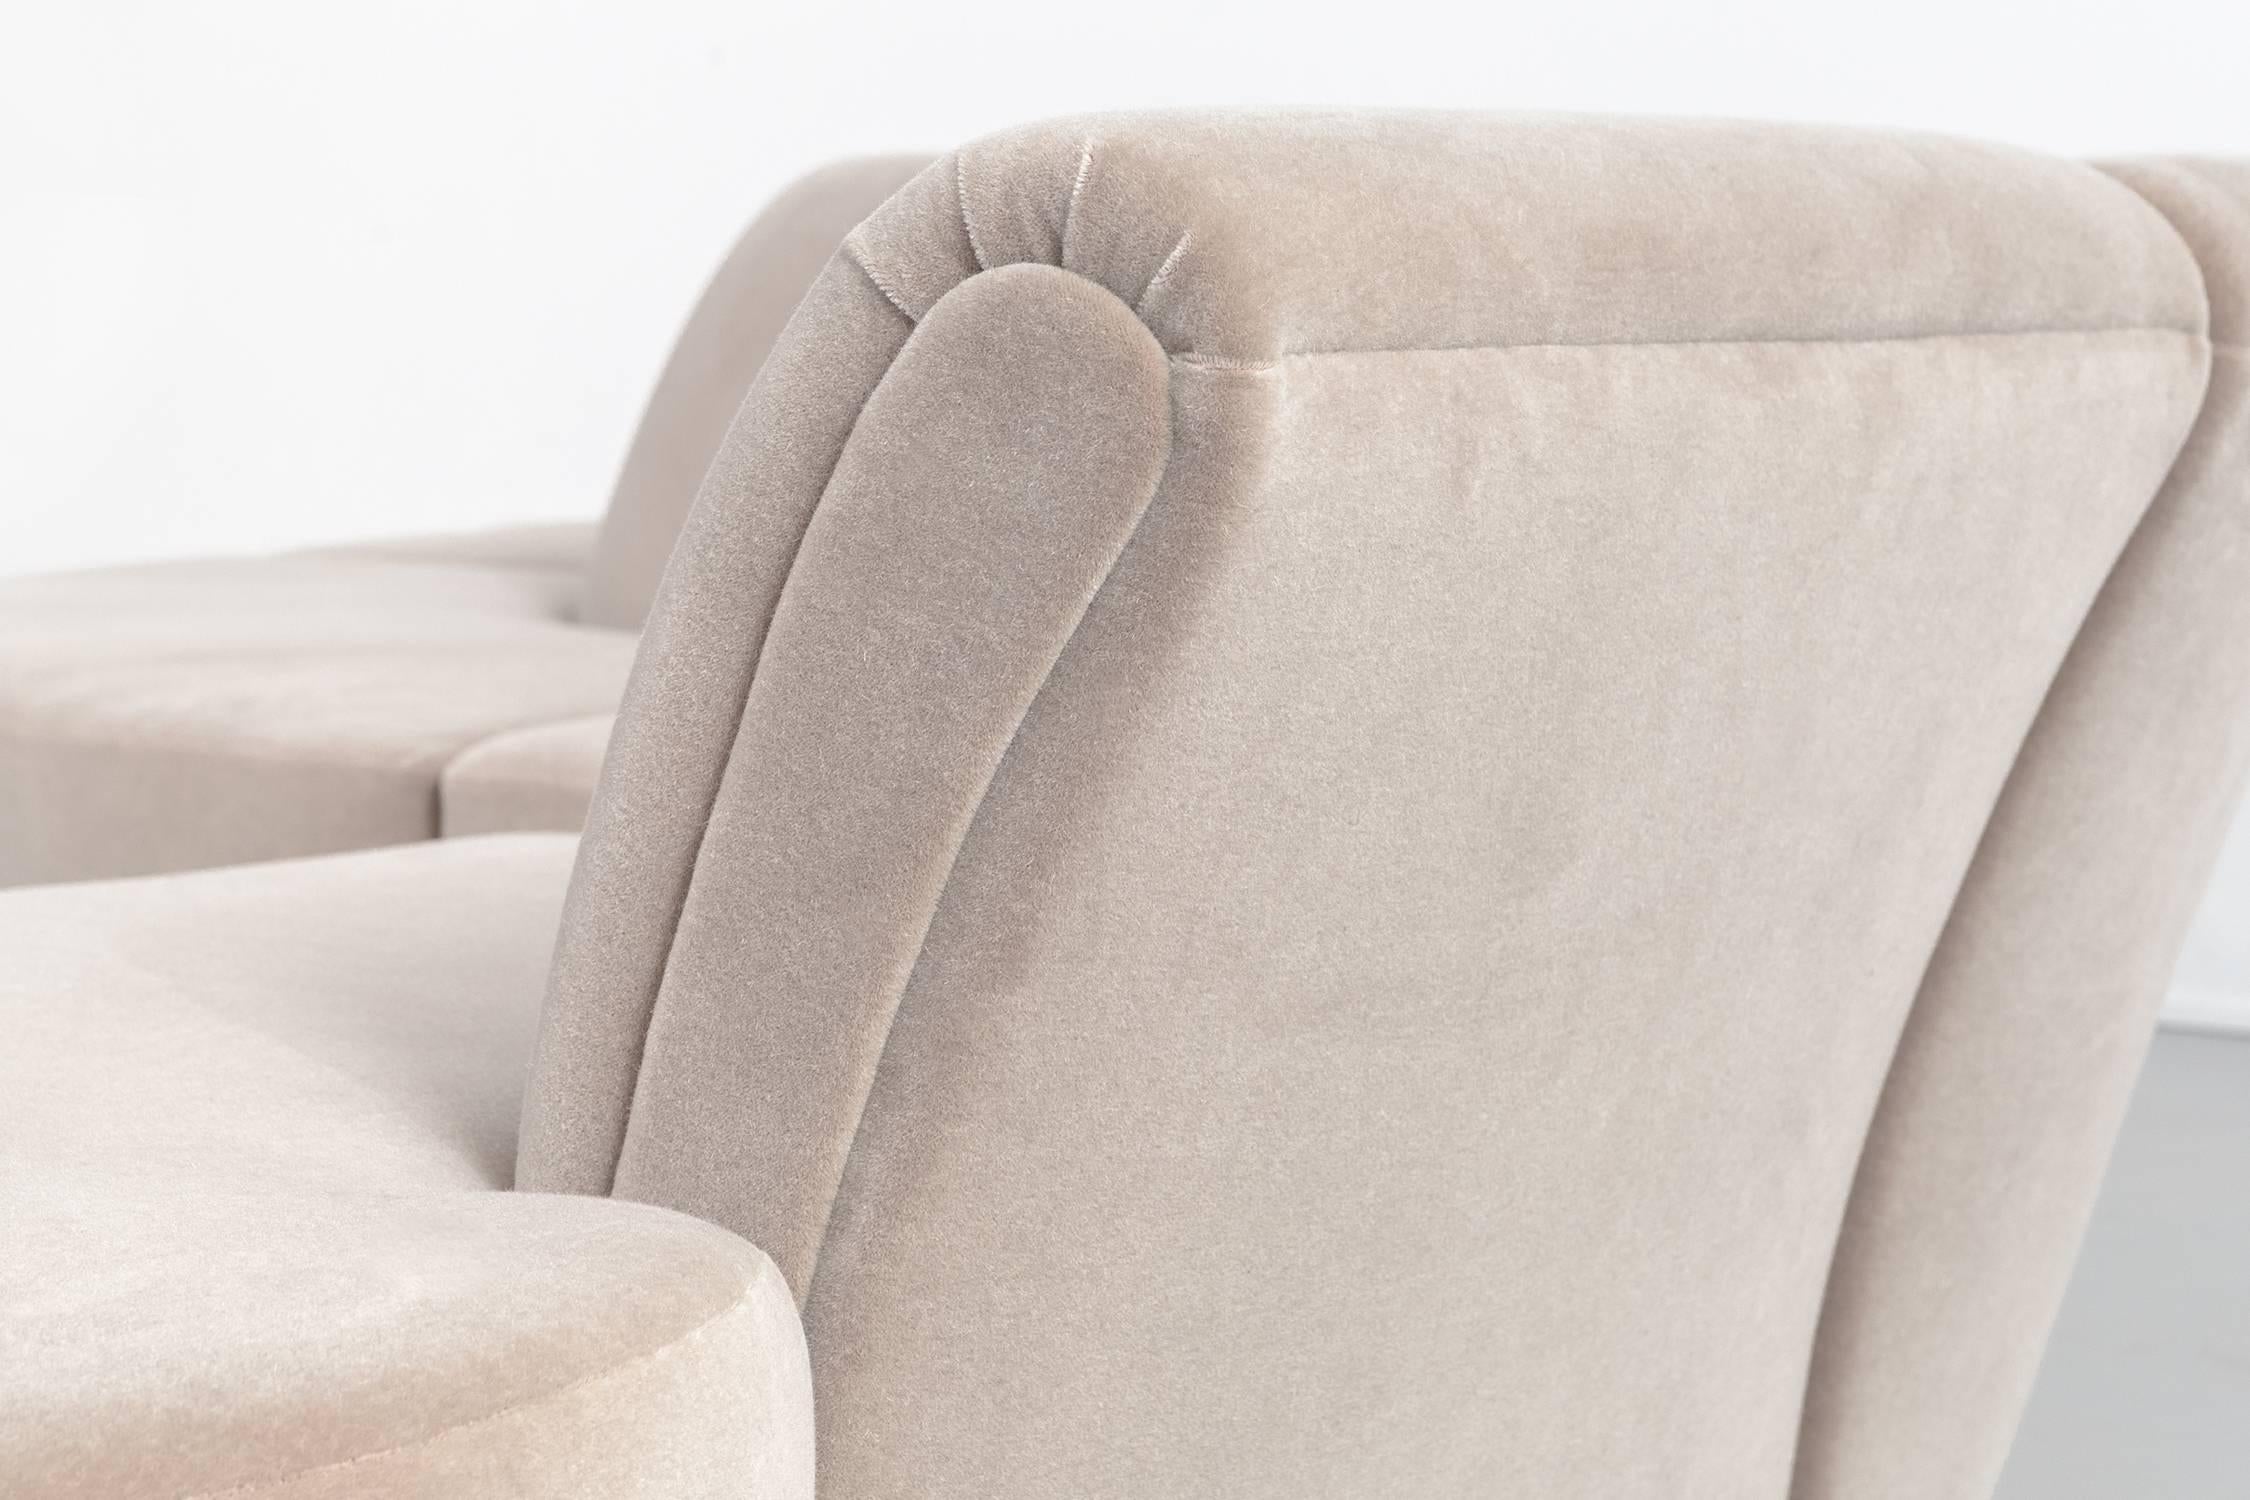 Mid-Century Modern Vladimir Kagan Sectional Sofa Freshly Reupholstered in Mohair over Brass